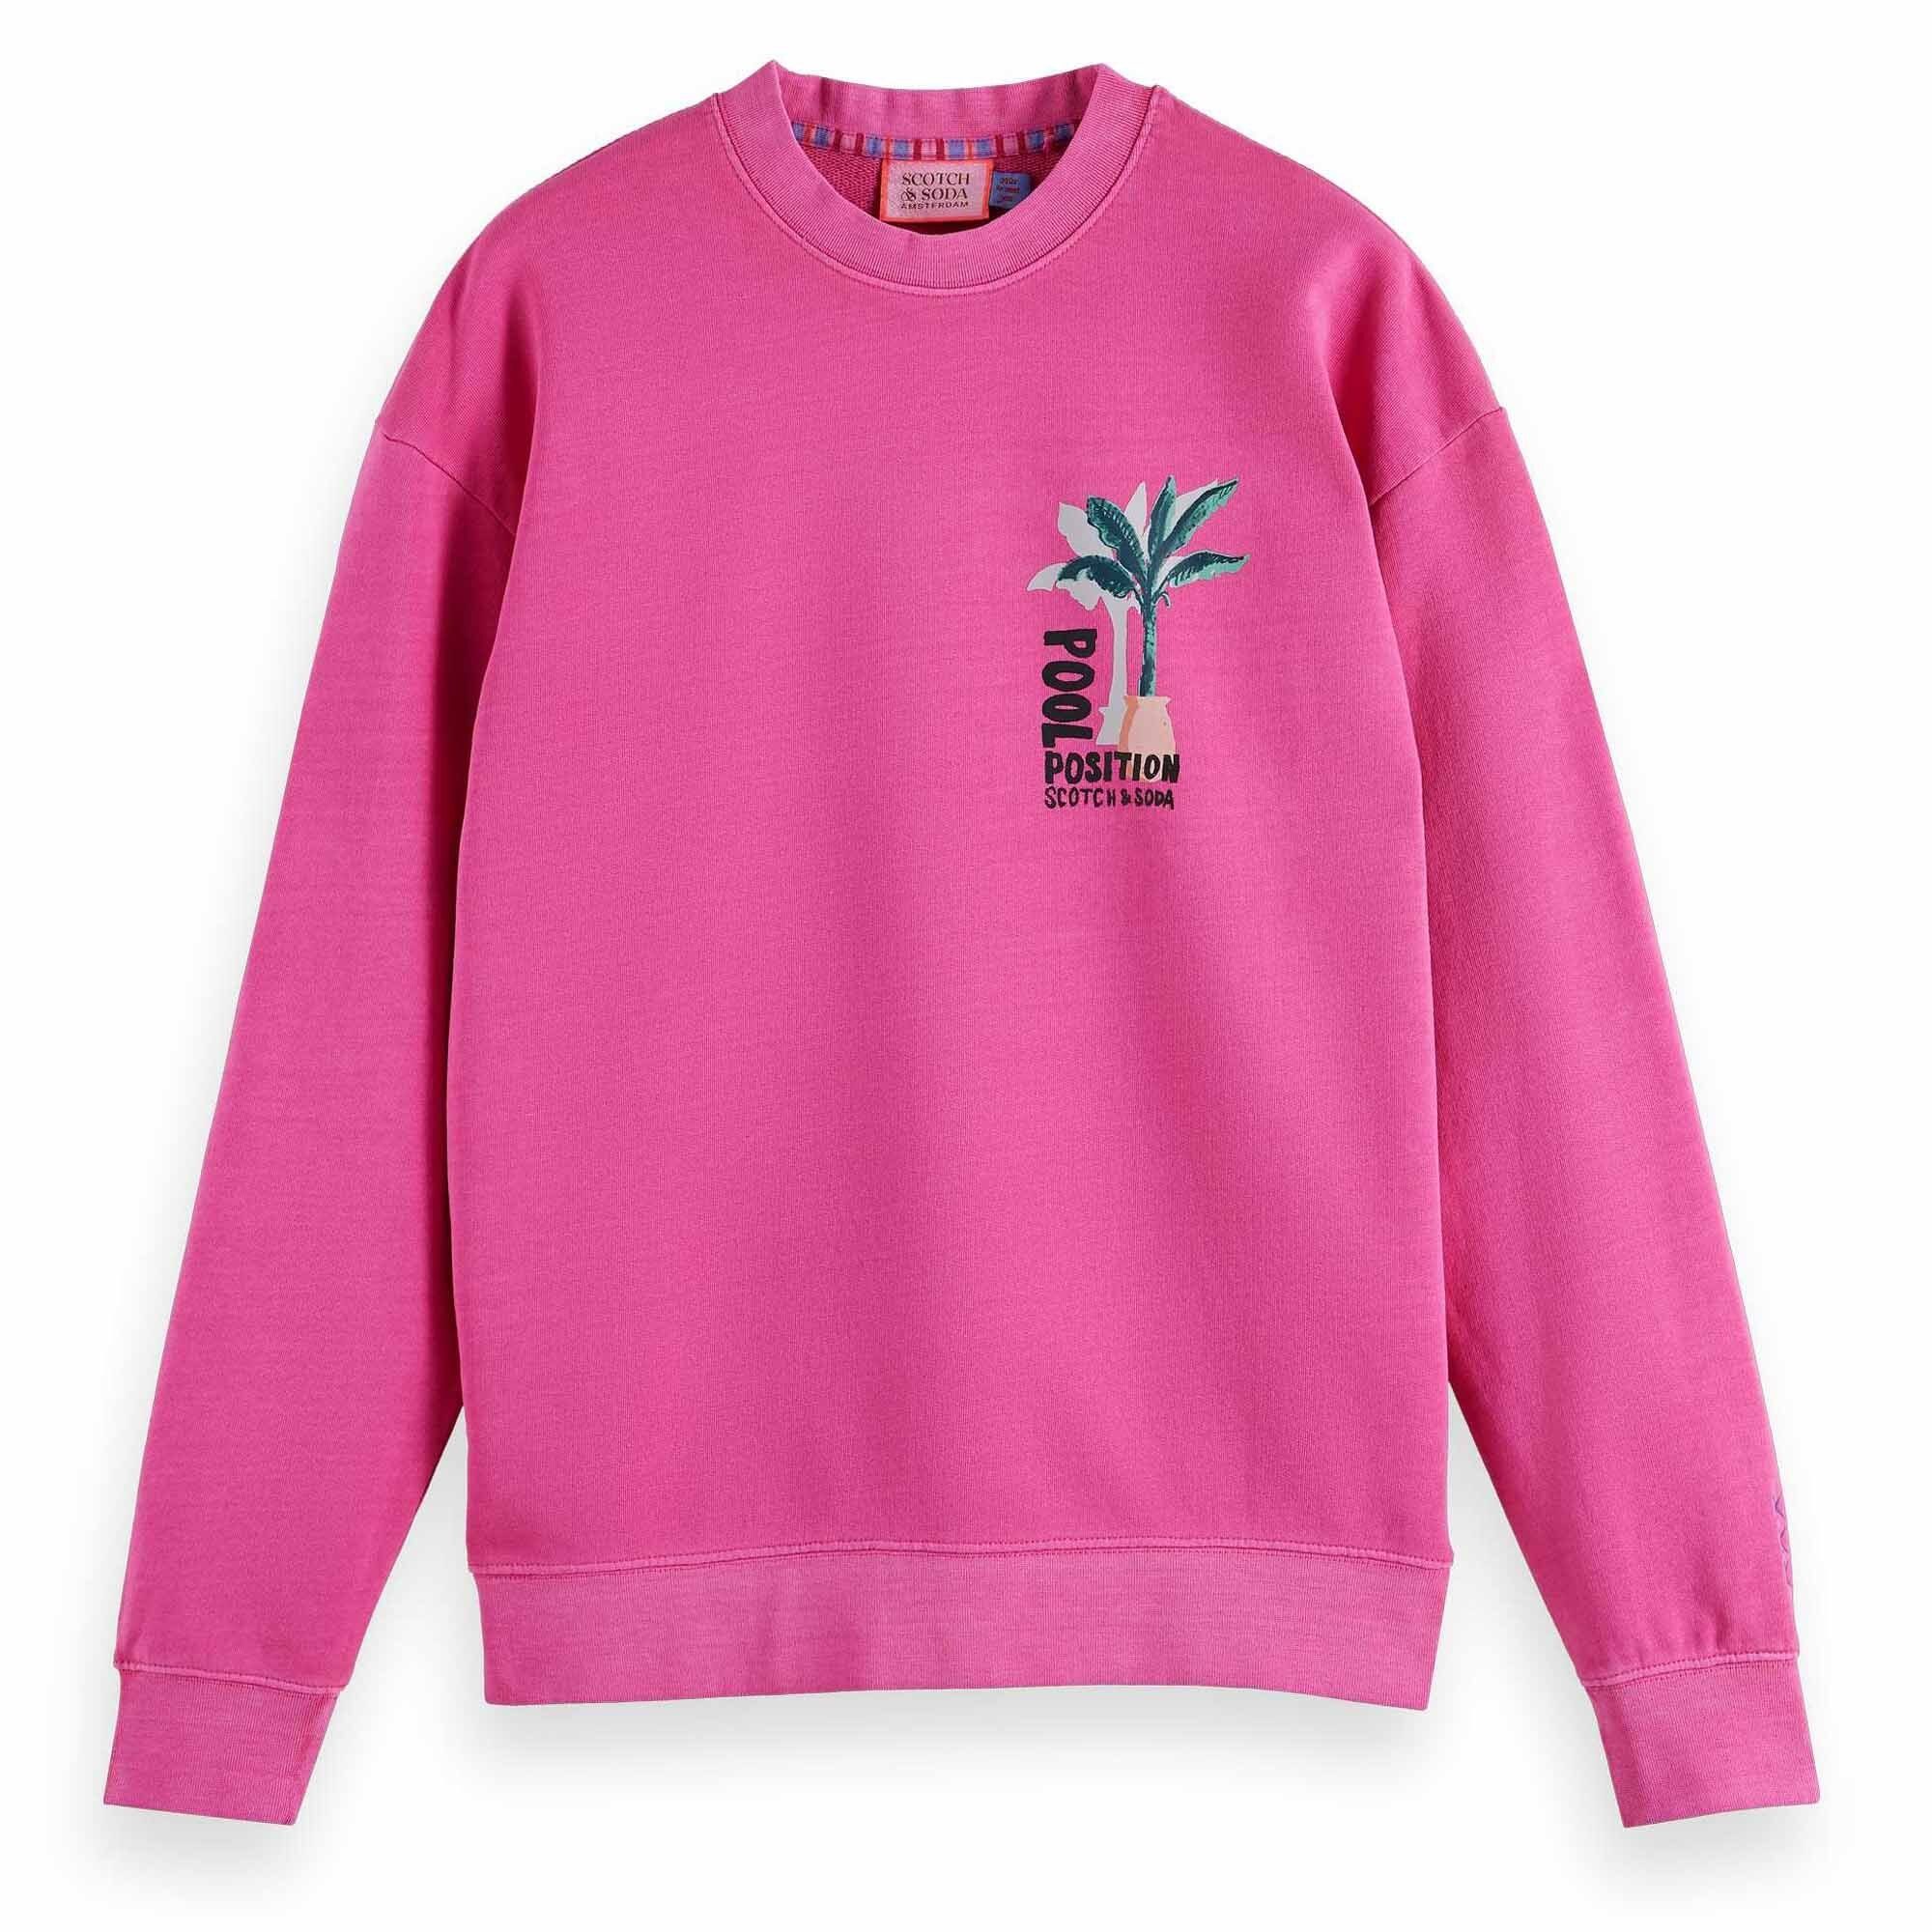 Scotch & Soda Sweatshirt Herren Printed Sweatshirt Sweatshirt, - Rundhals Pink